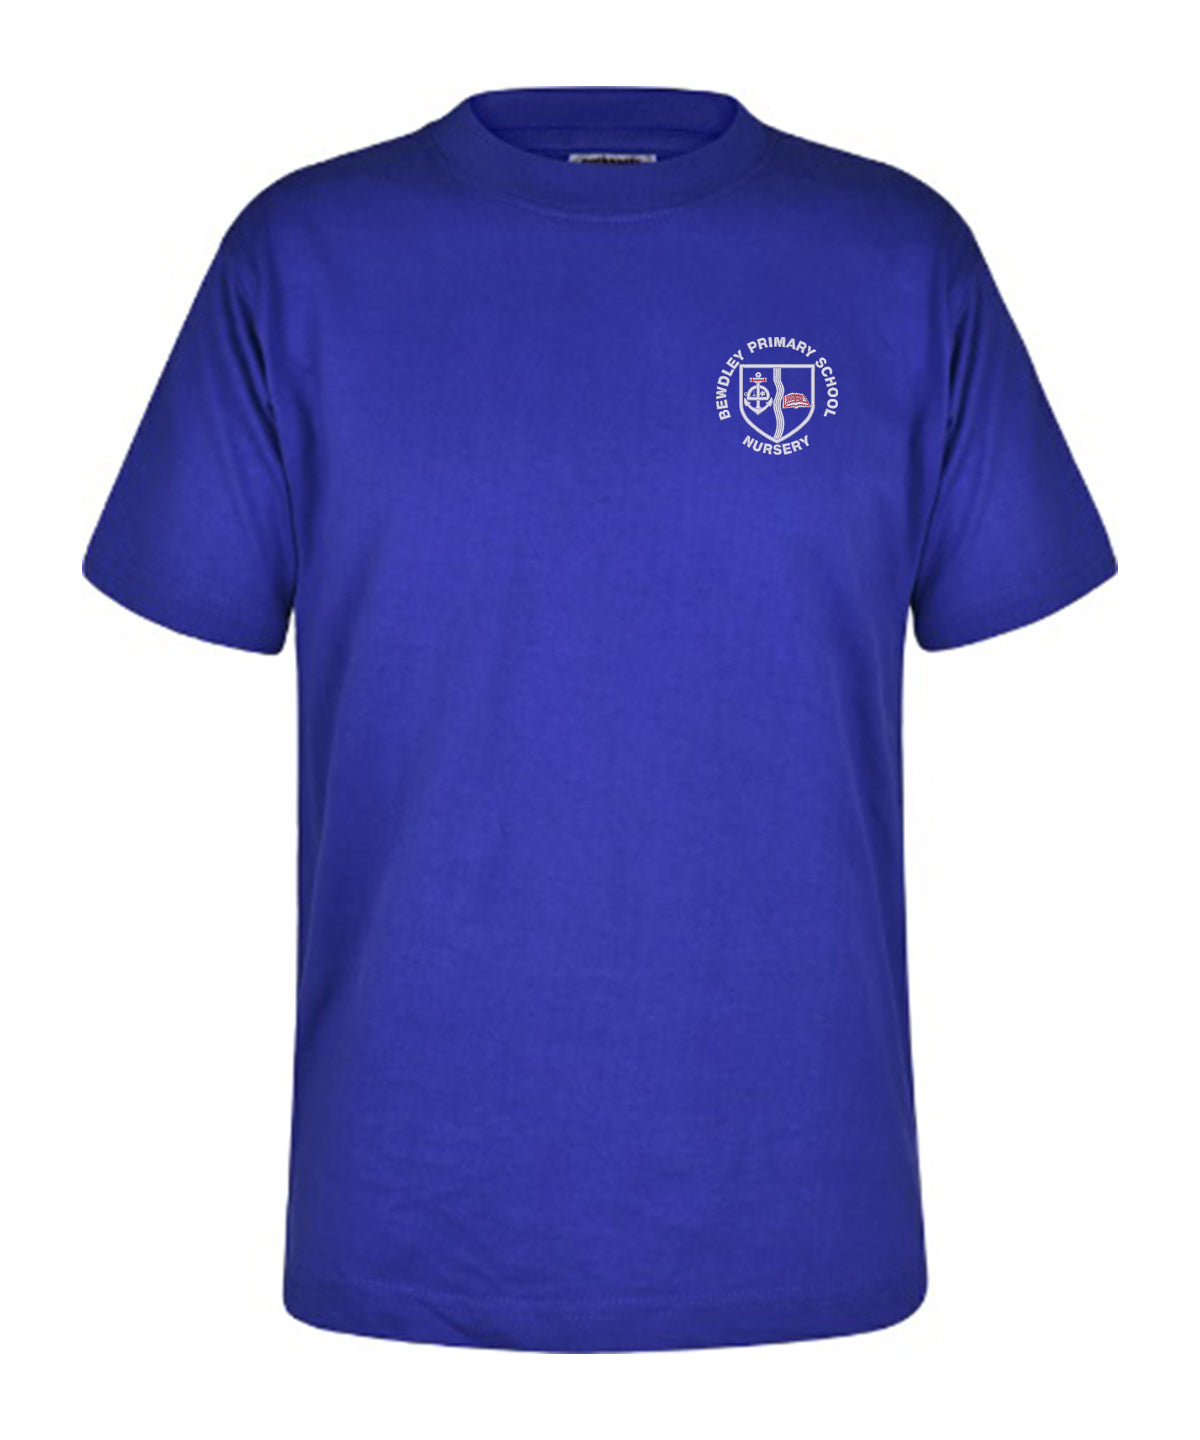 Bewdley Primary School - Nursery Only - Unisex Cotton T-Shirt - Royal Blue